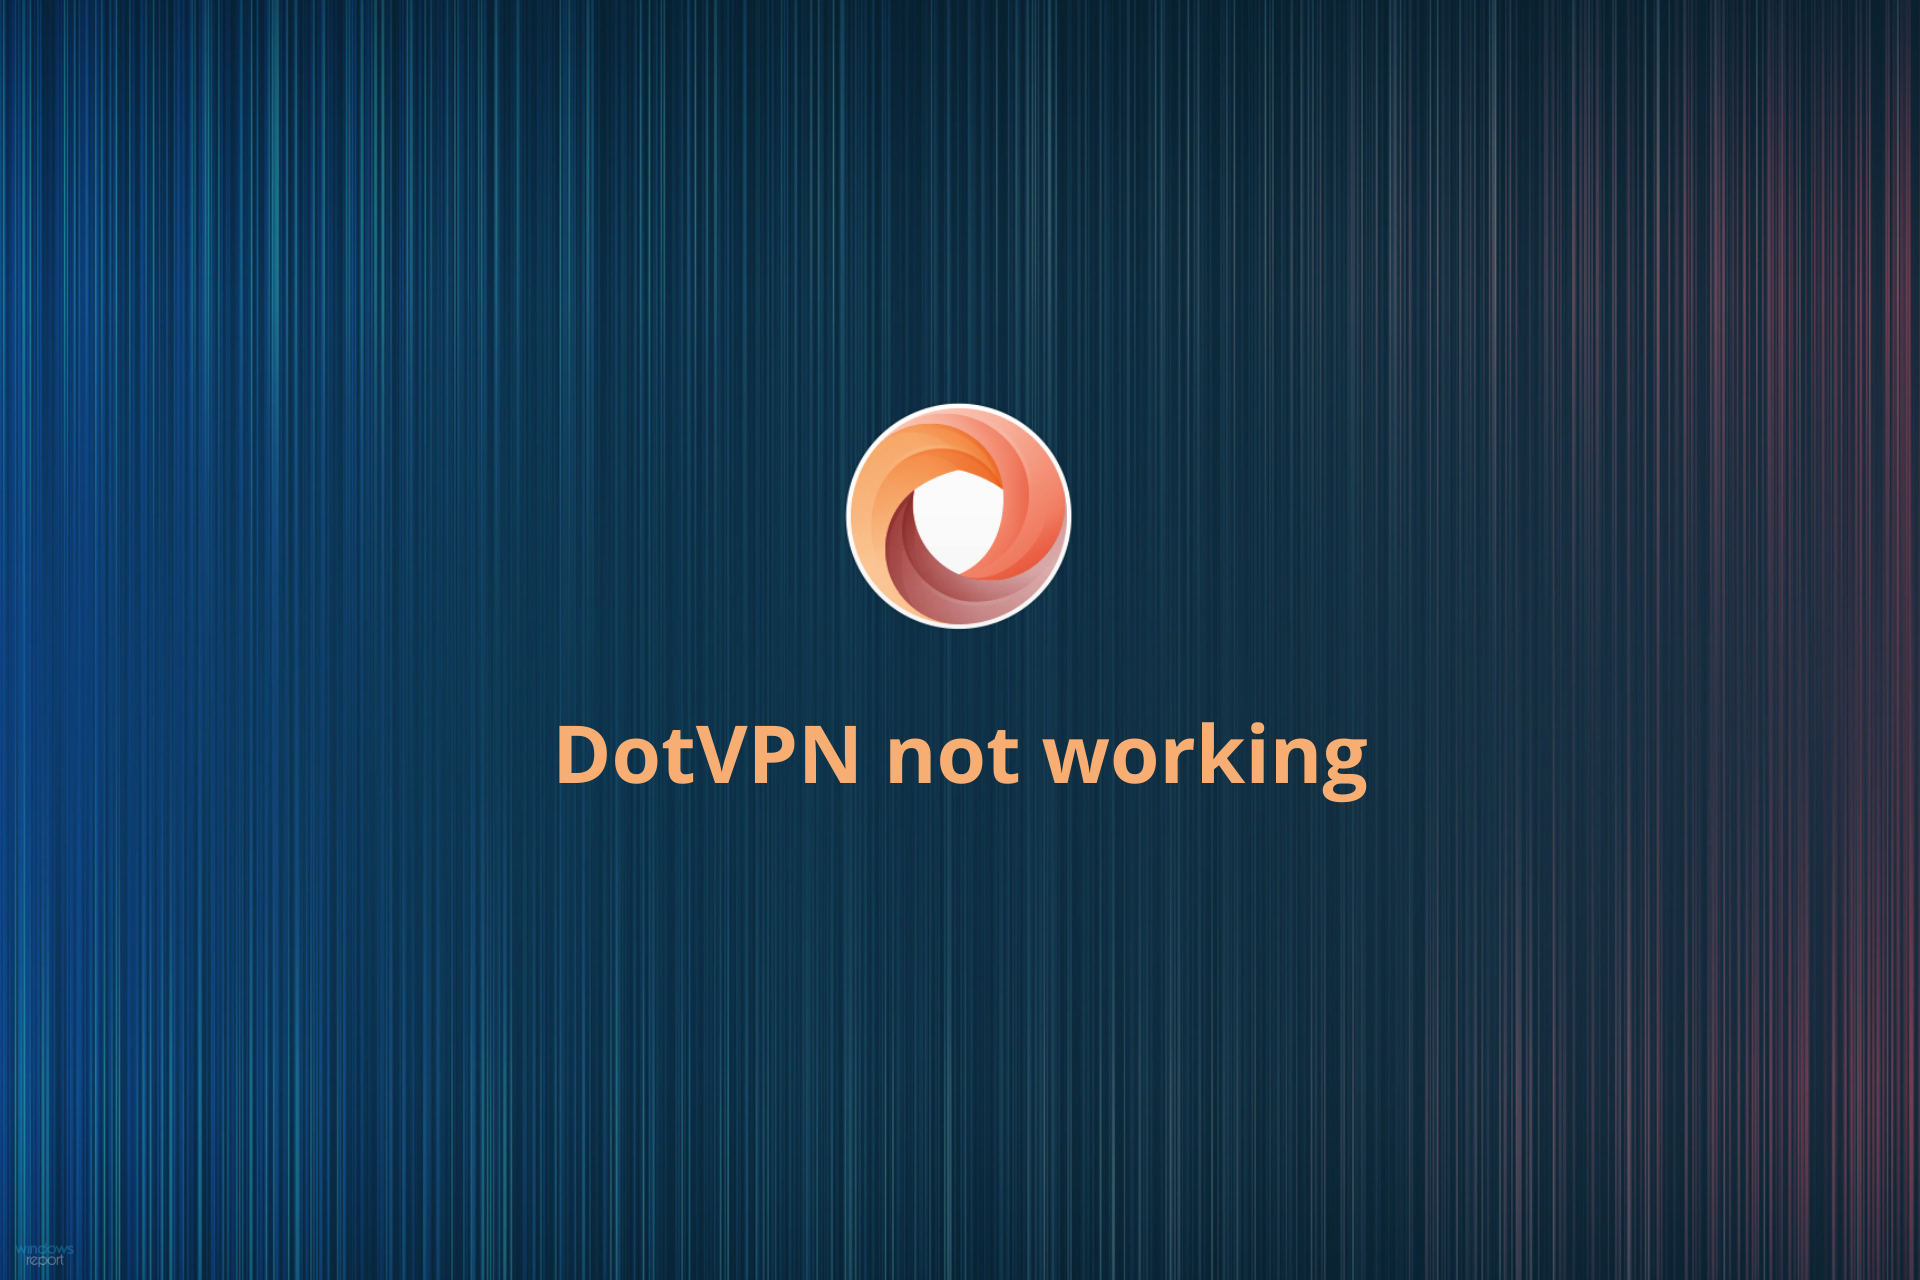 DotVPN not working